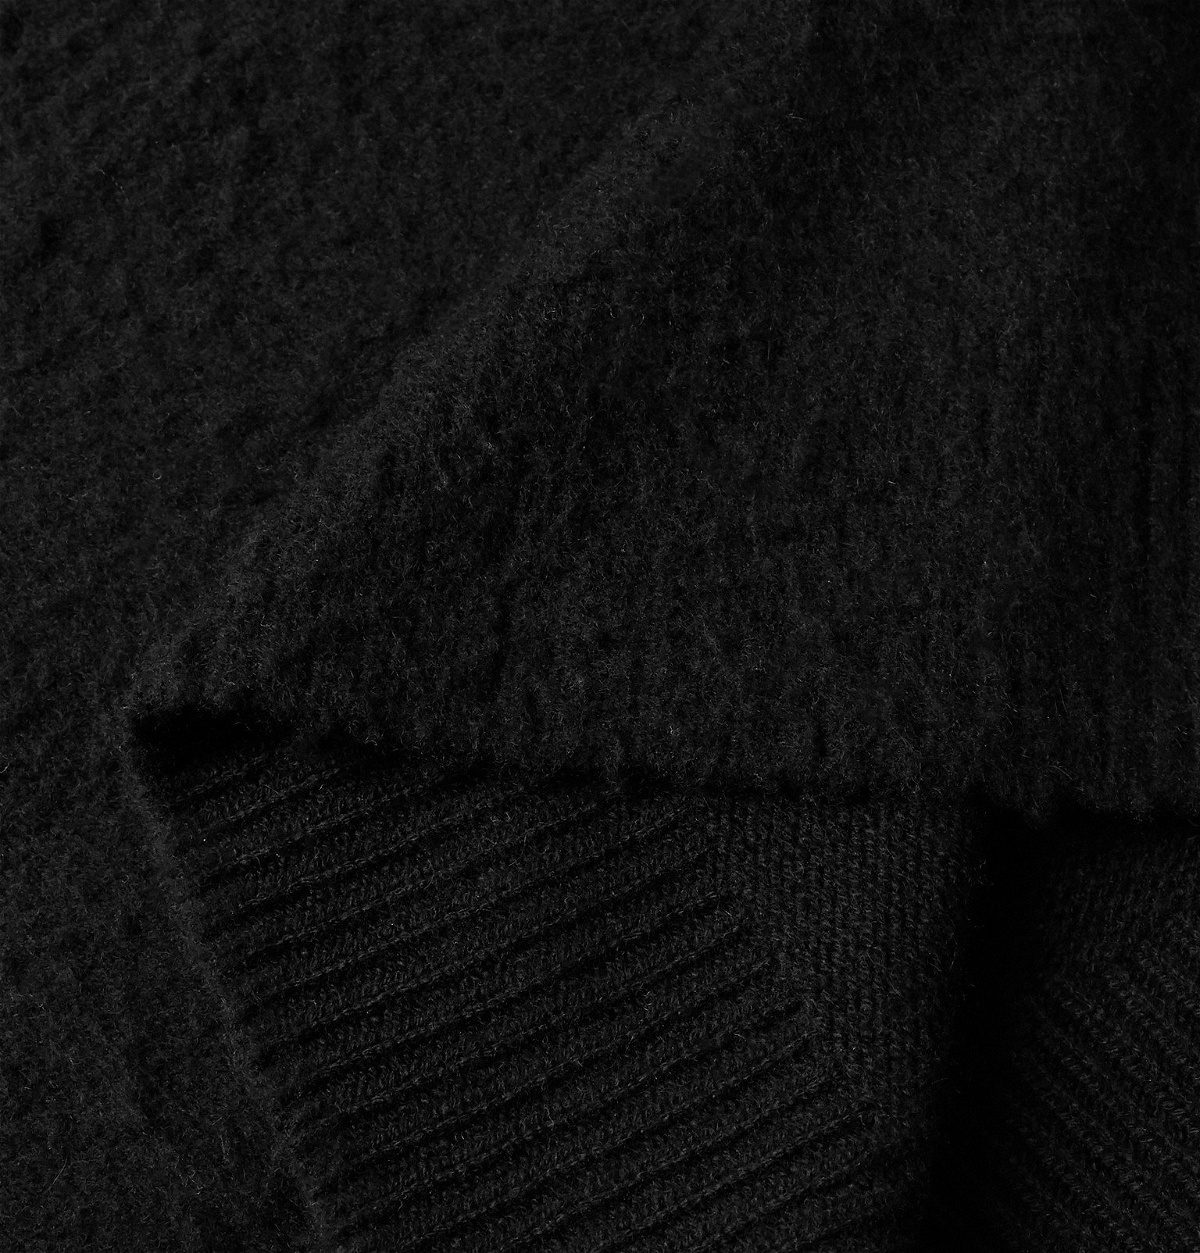 Acne Studios - Peele Wool and Cashmere-Blend Sweater - Black Acne Studios